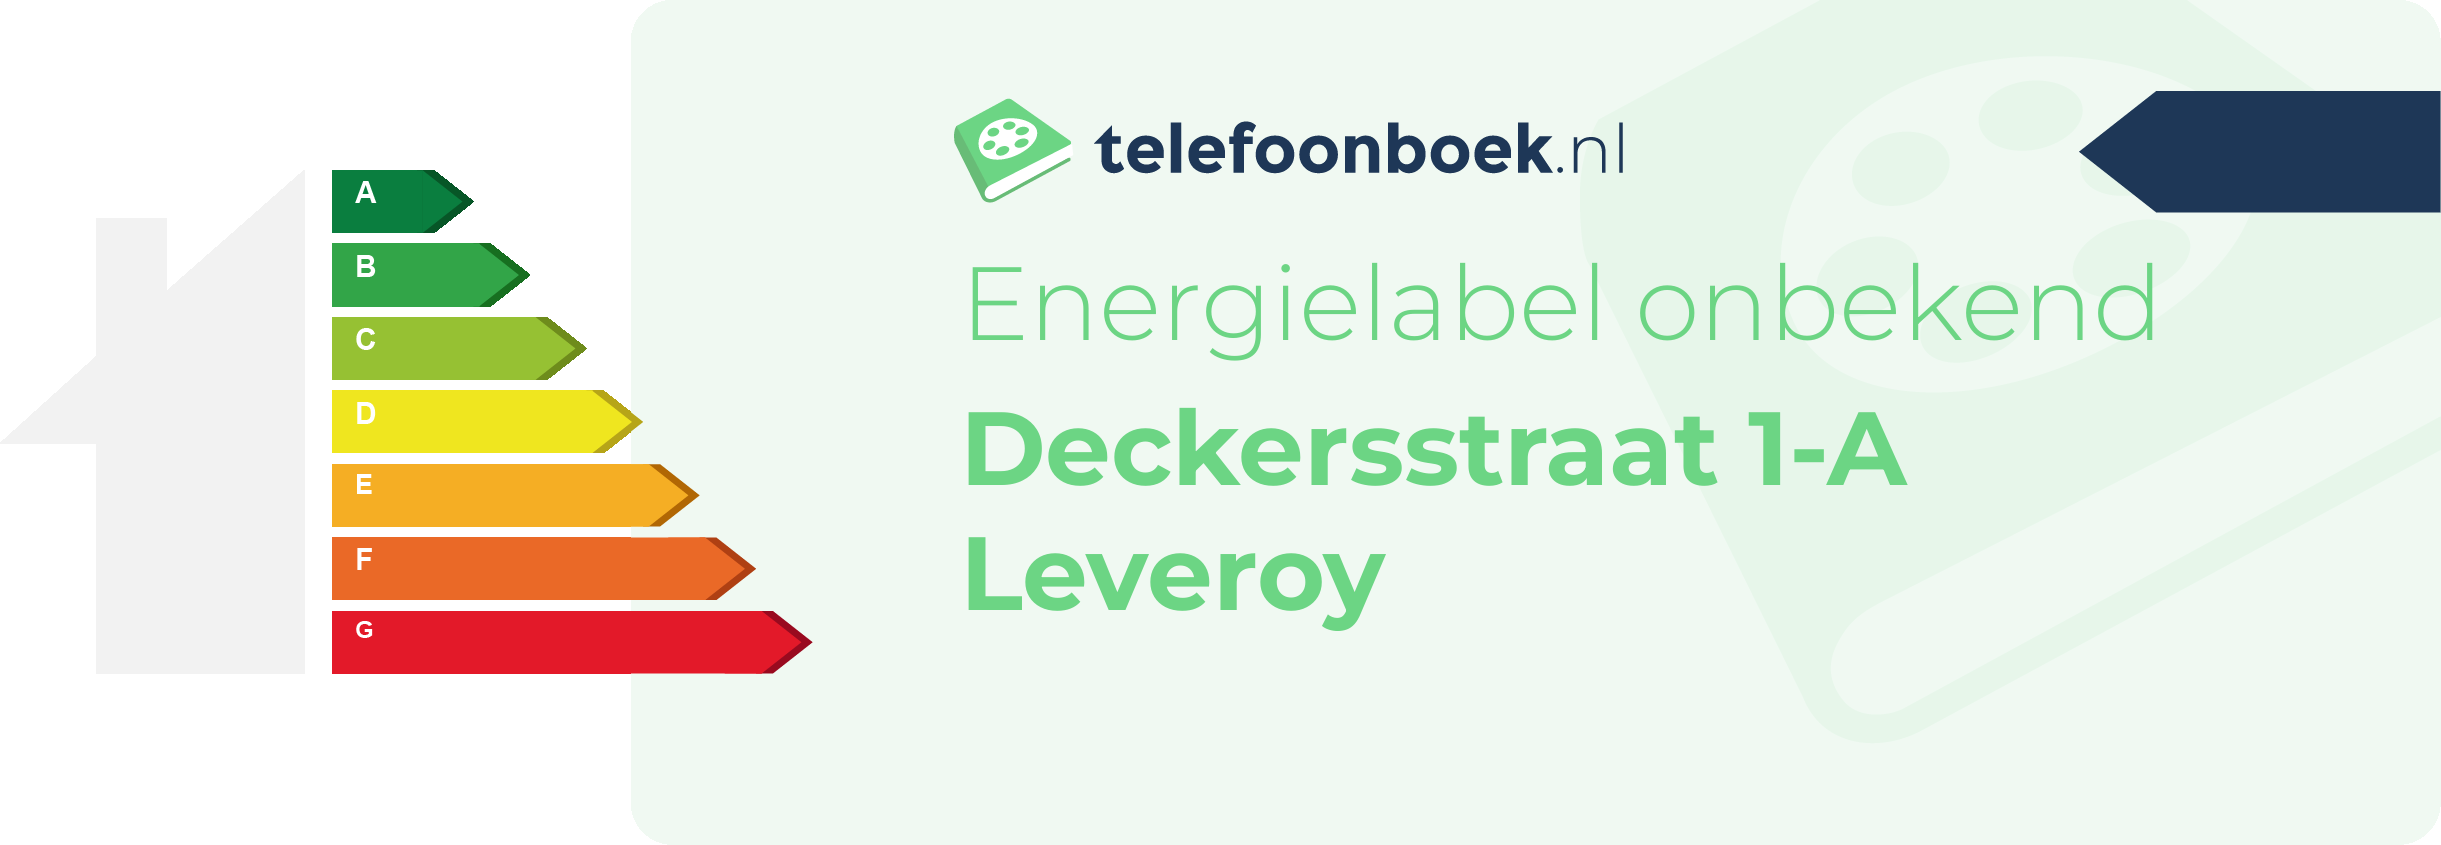 Energielabel Deckersstraat 1-A Leveroy